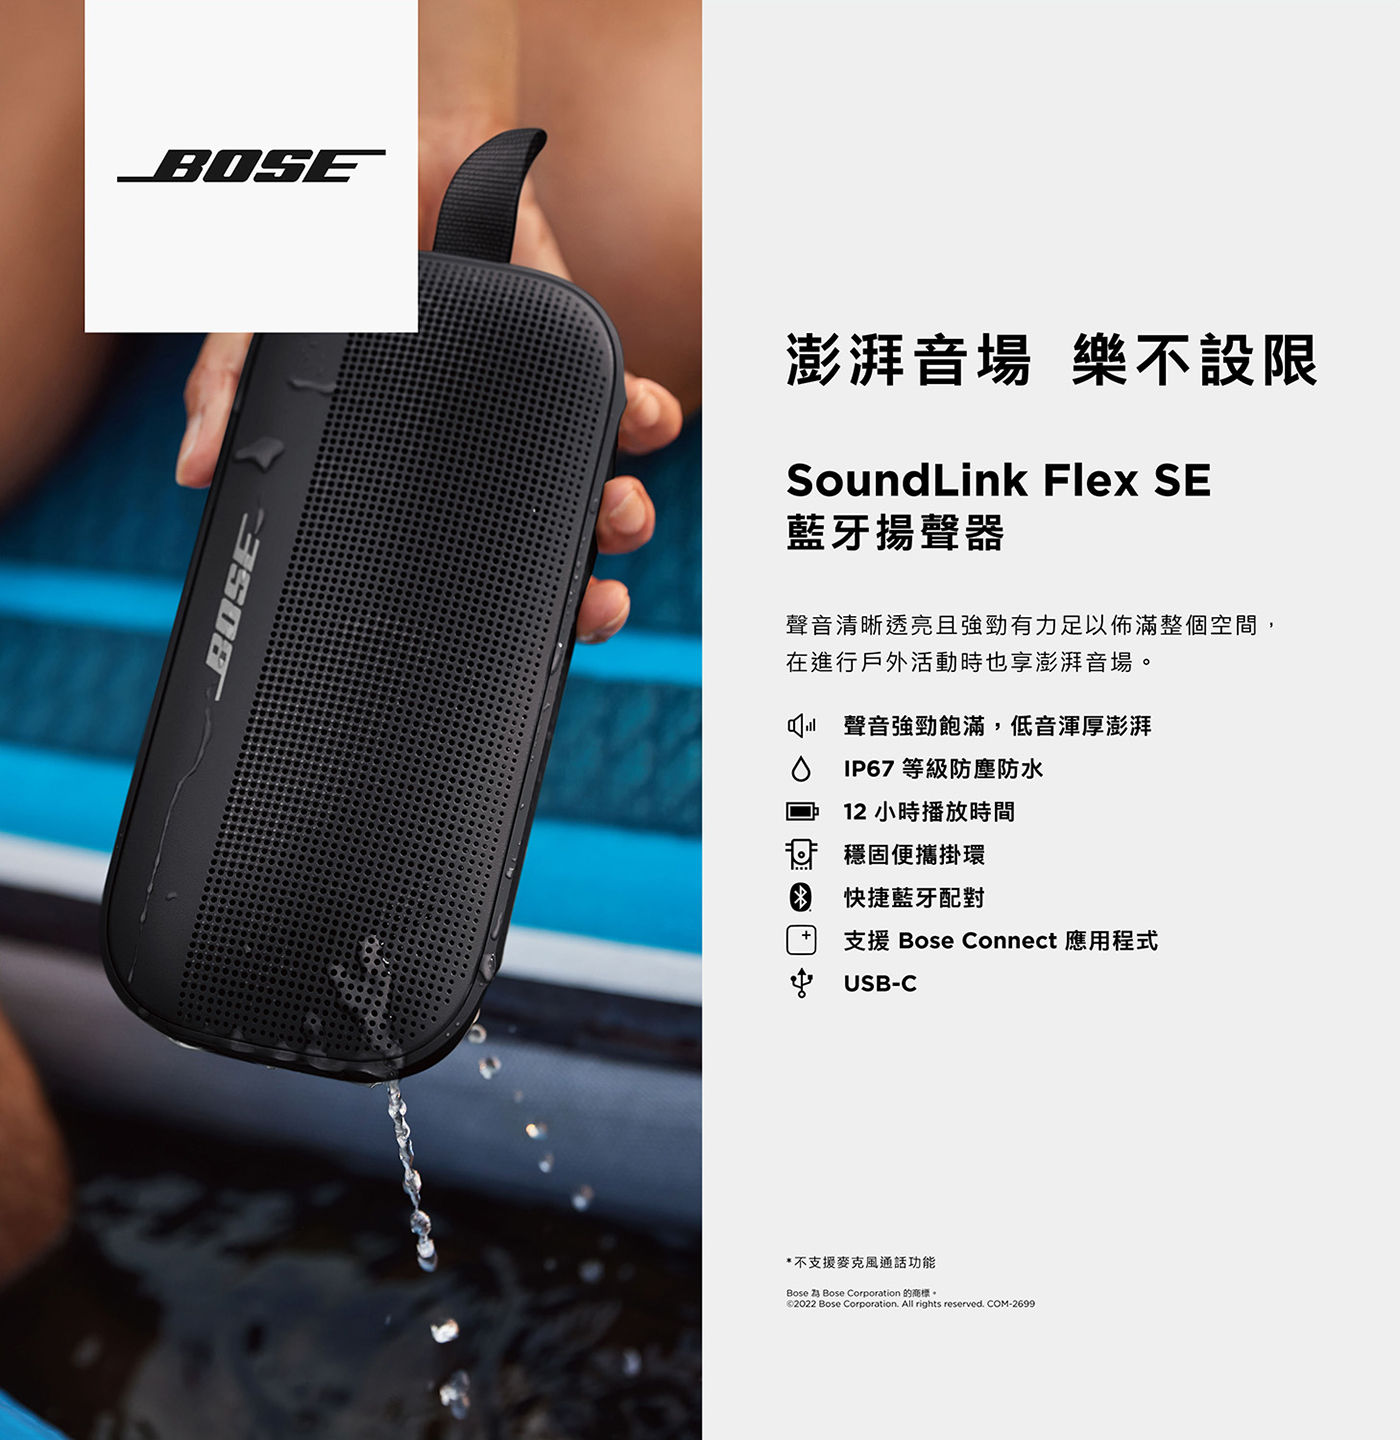 Bose SoundLink Flex SE 藍牙揚聲器澎湃音場樂不設限，聲音清晰透亮且強勁有力足以布滿整個空間，進行戶外活動亦可